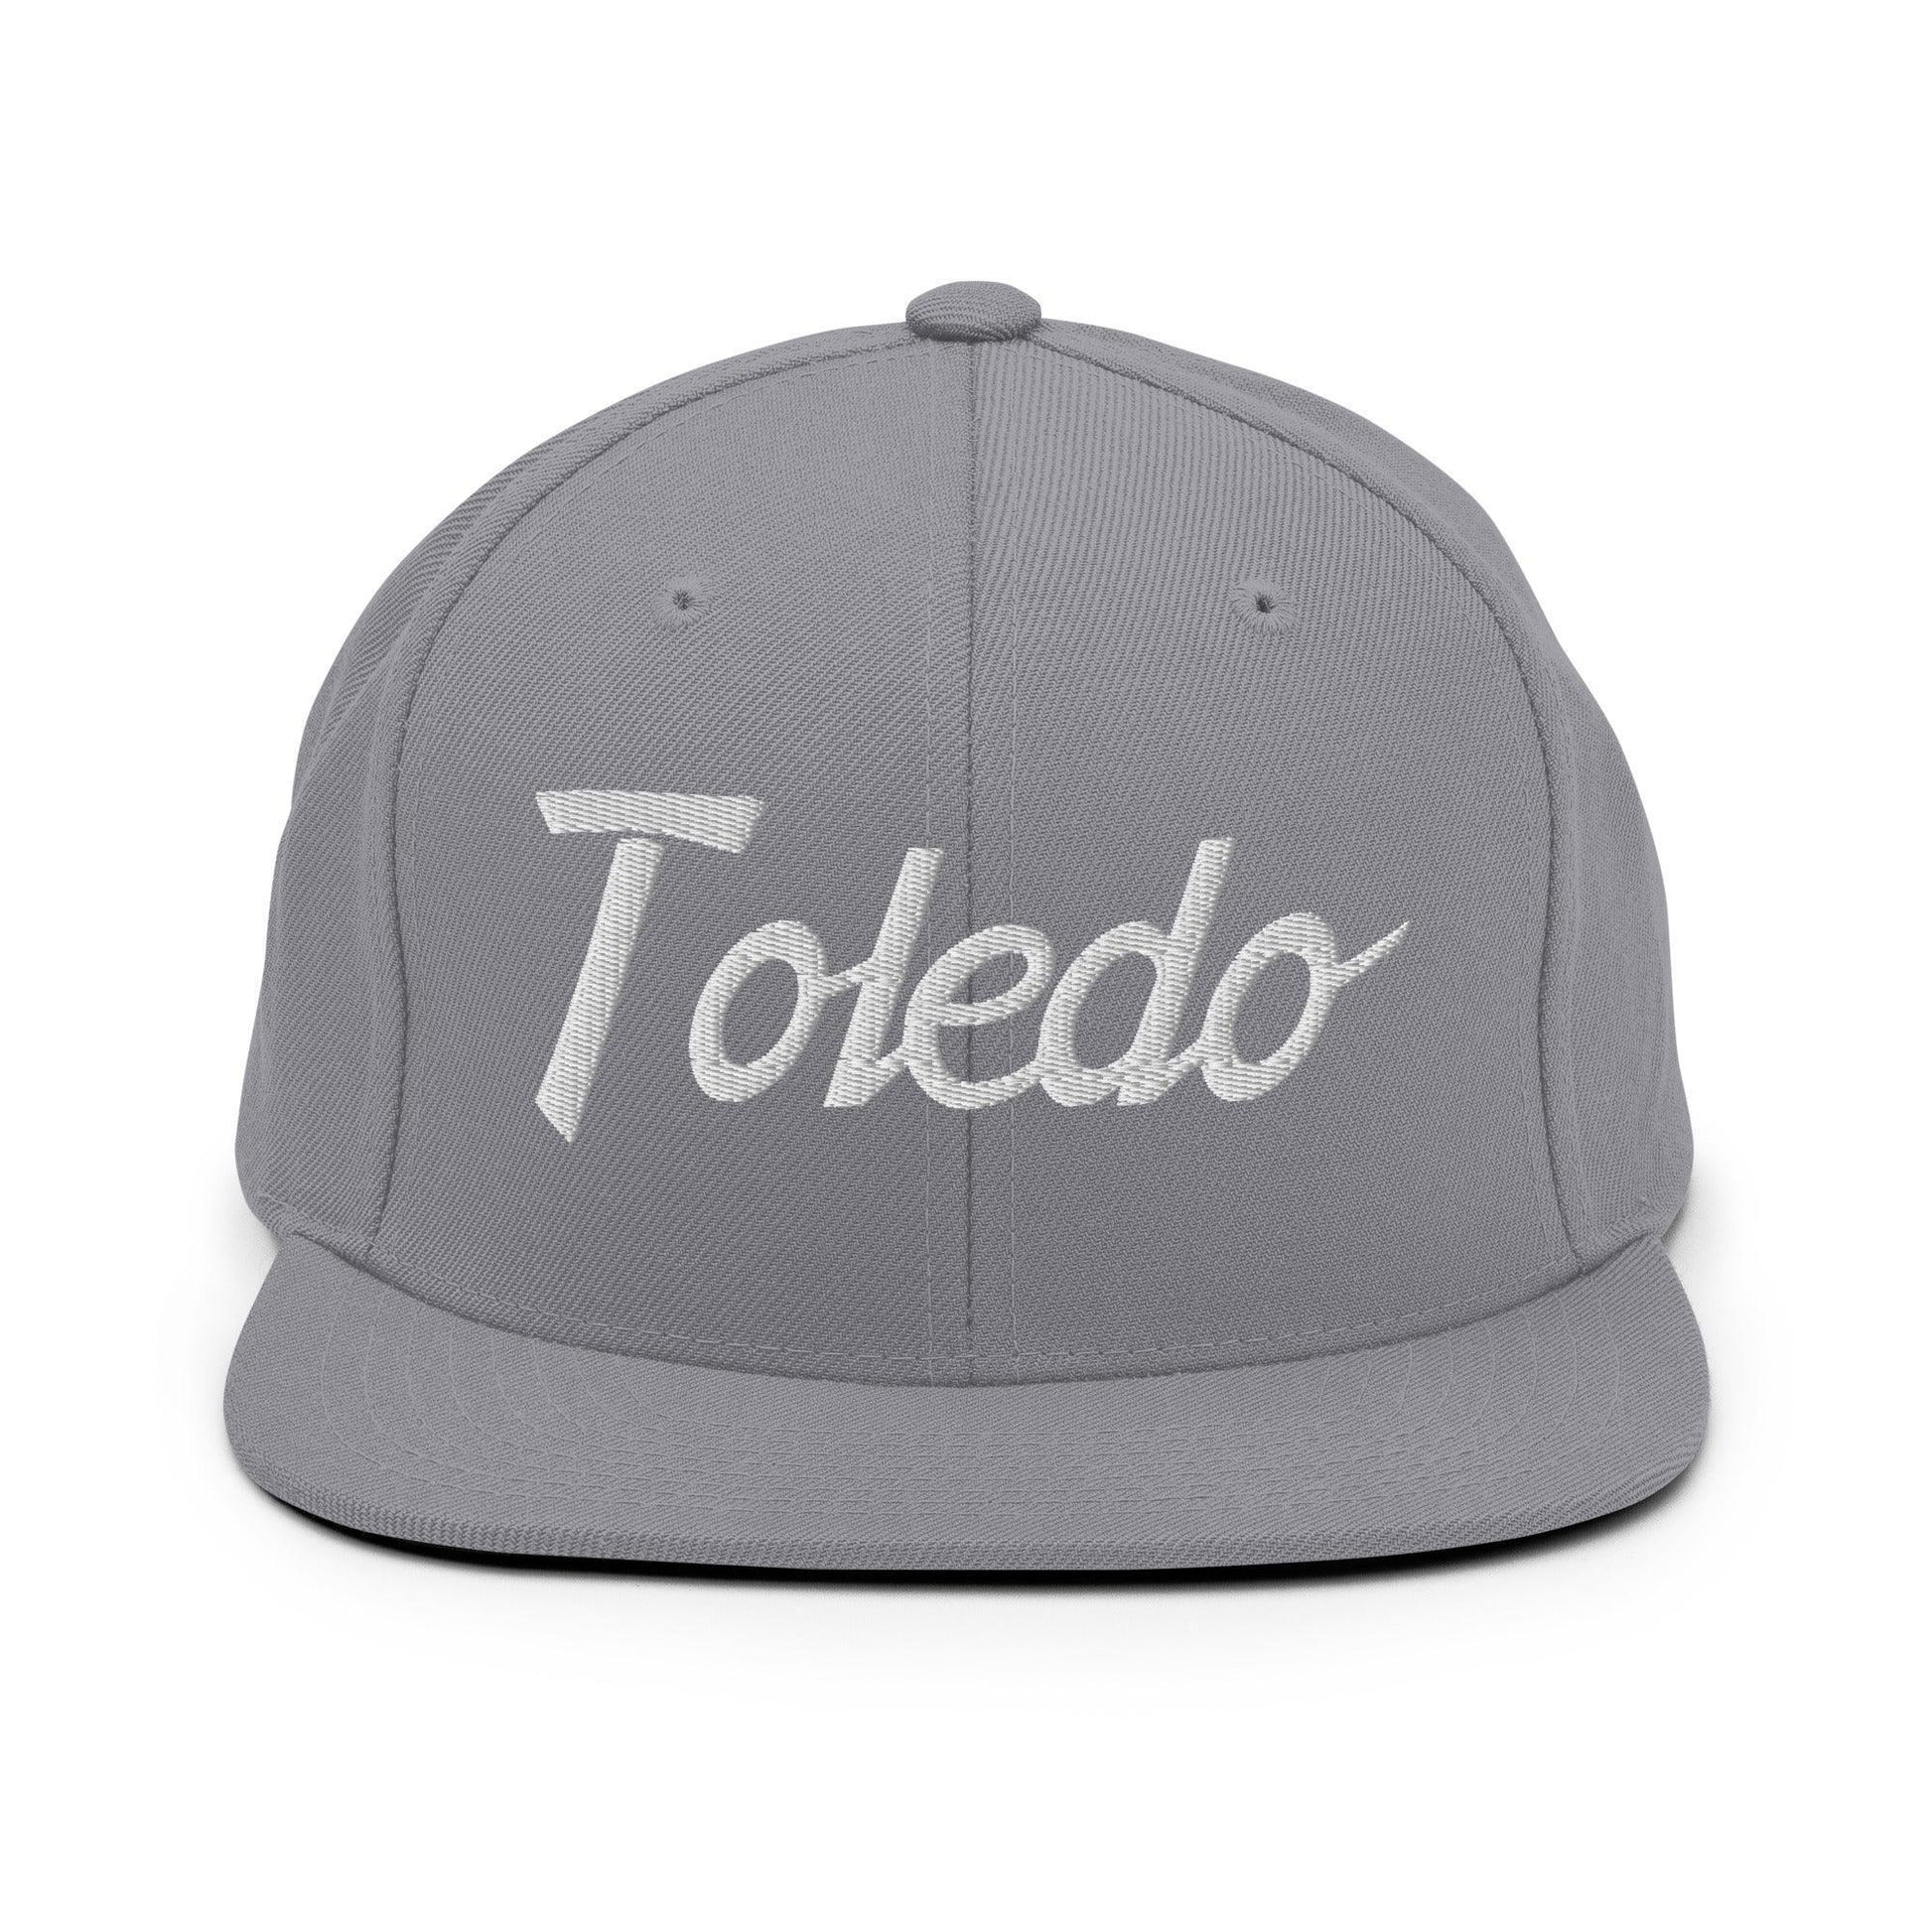 Toledo Script Snapback Hat Silver